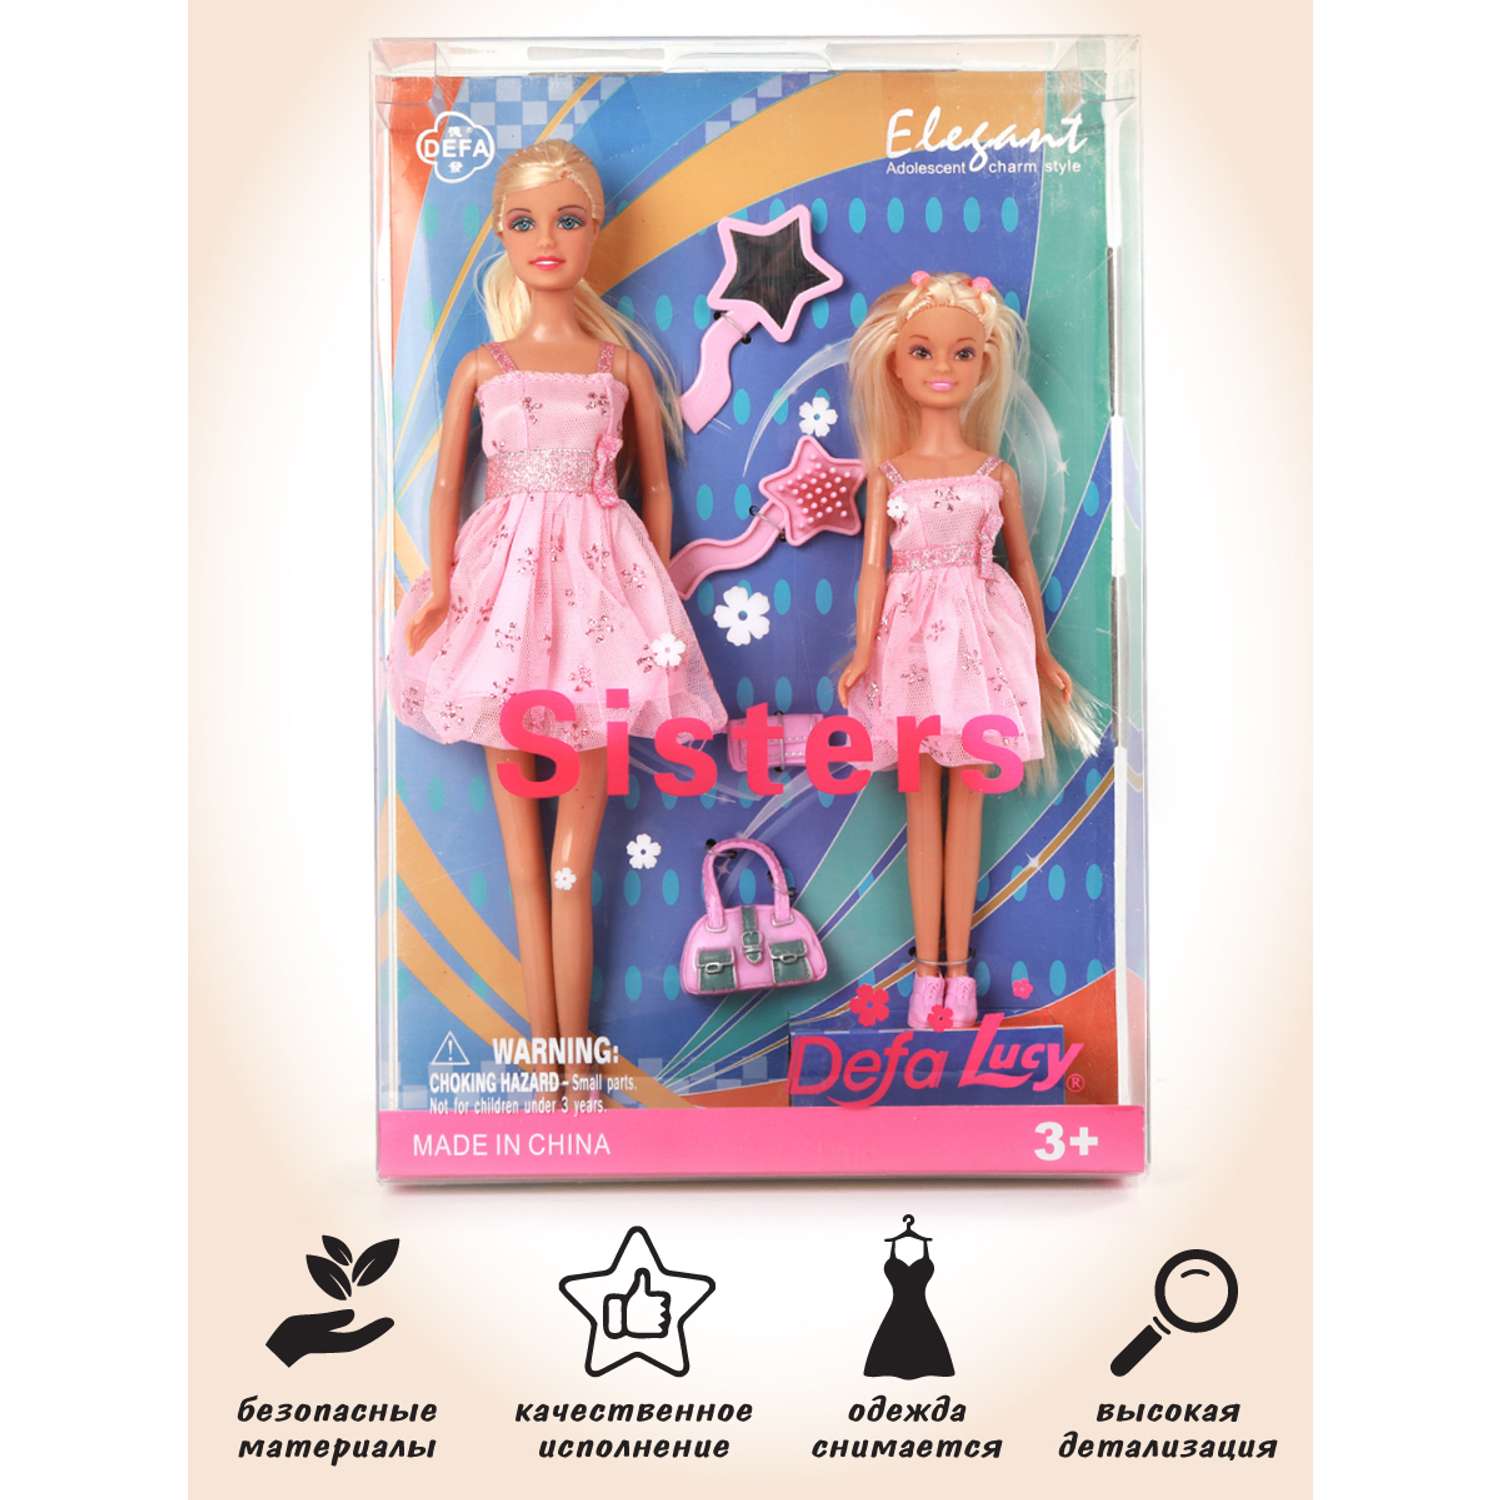 Куклы модель Барби сестры Veld Co на празднике 78470 - фото 1